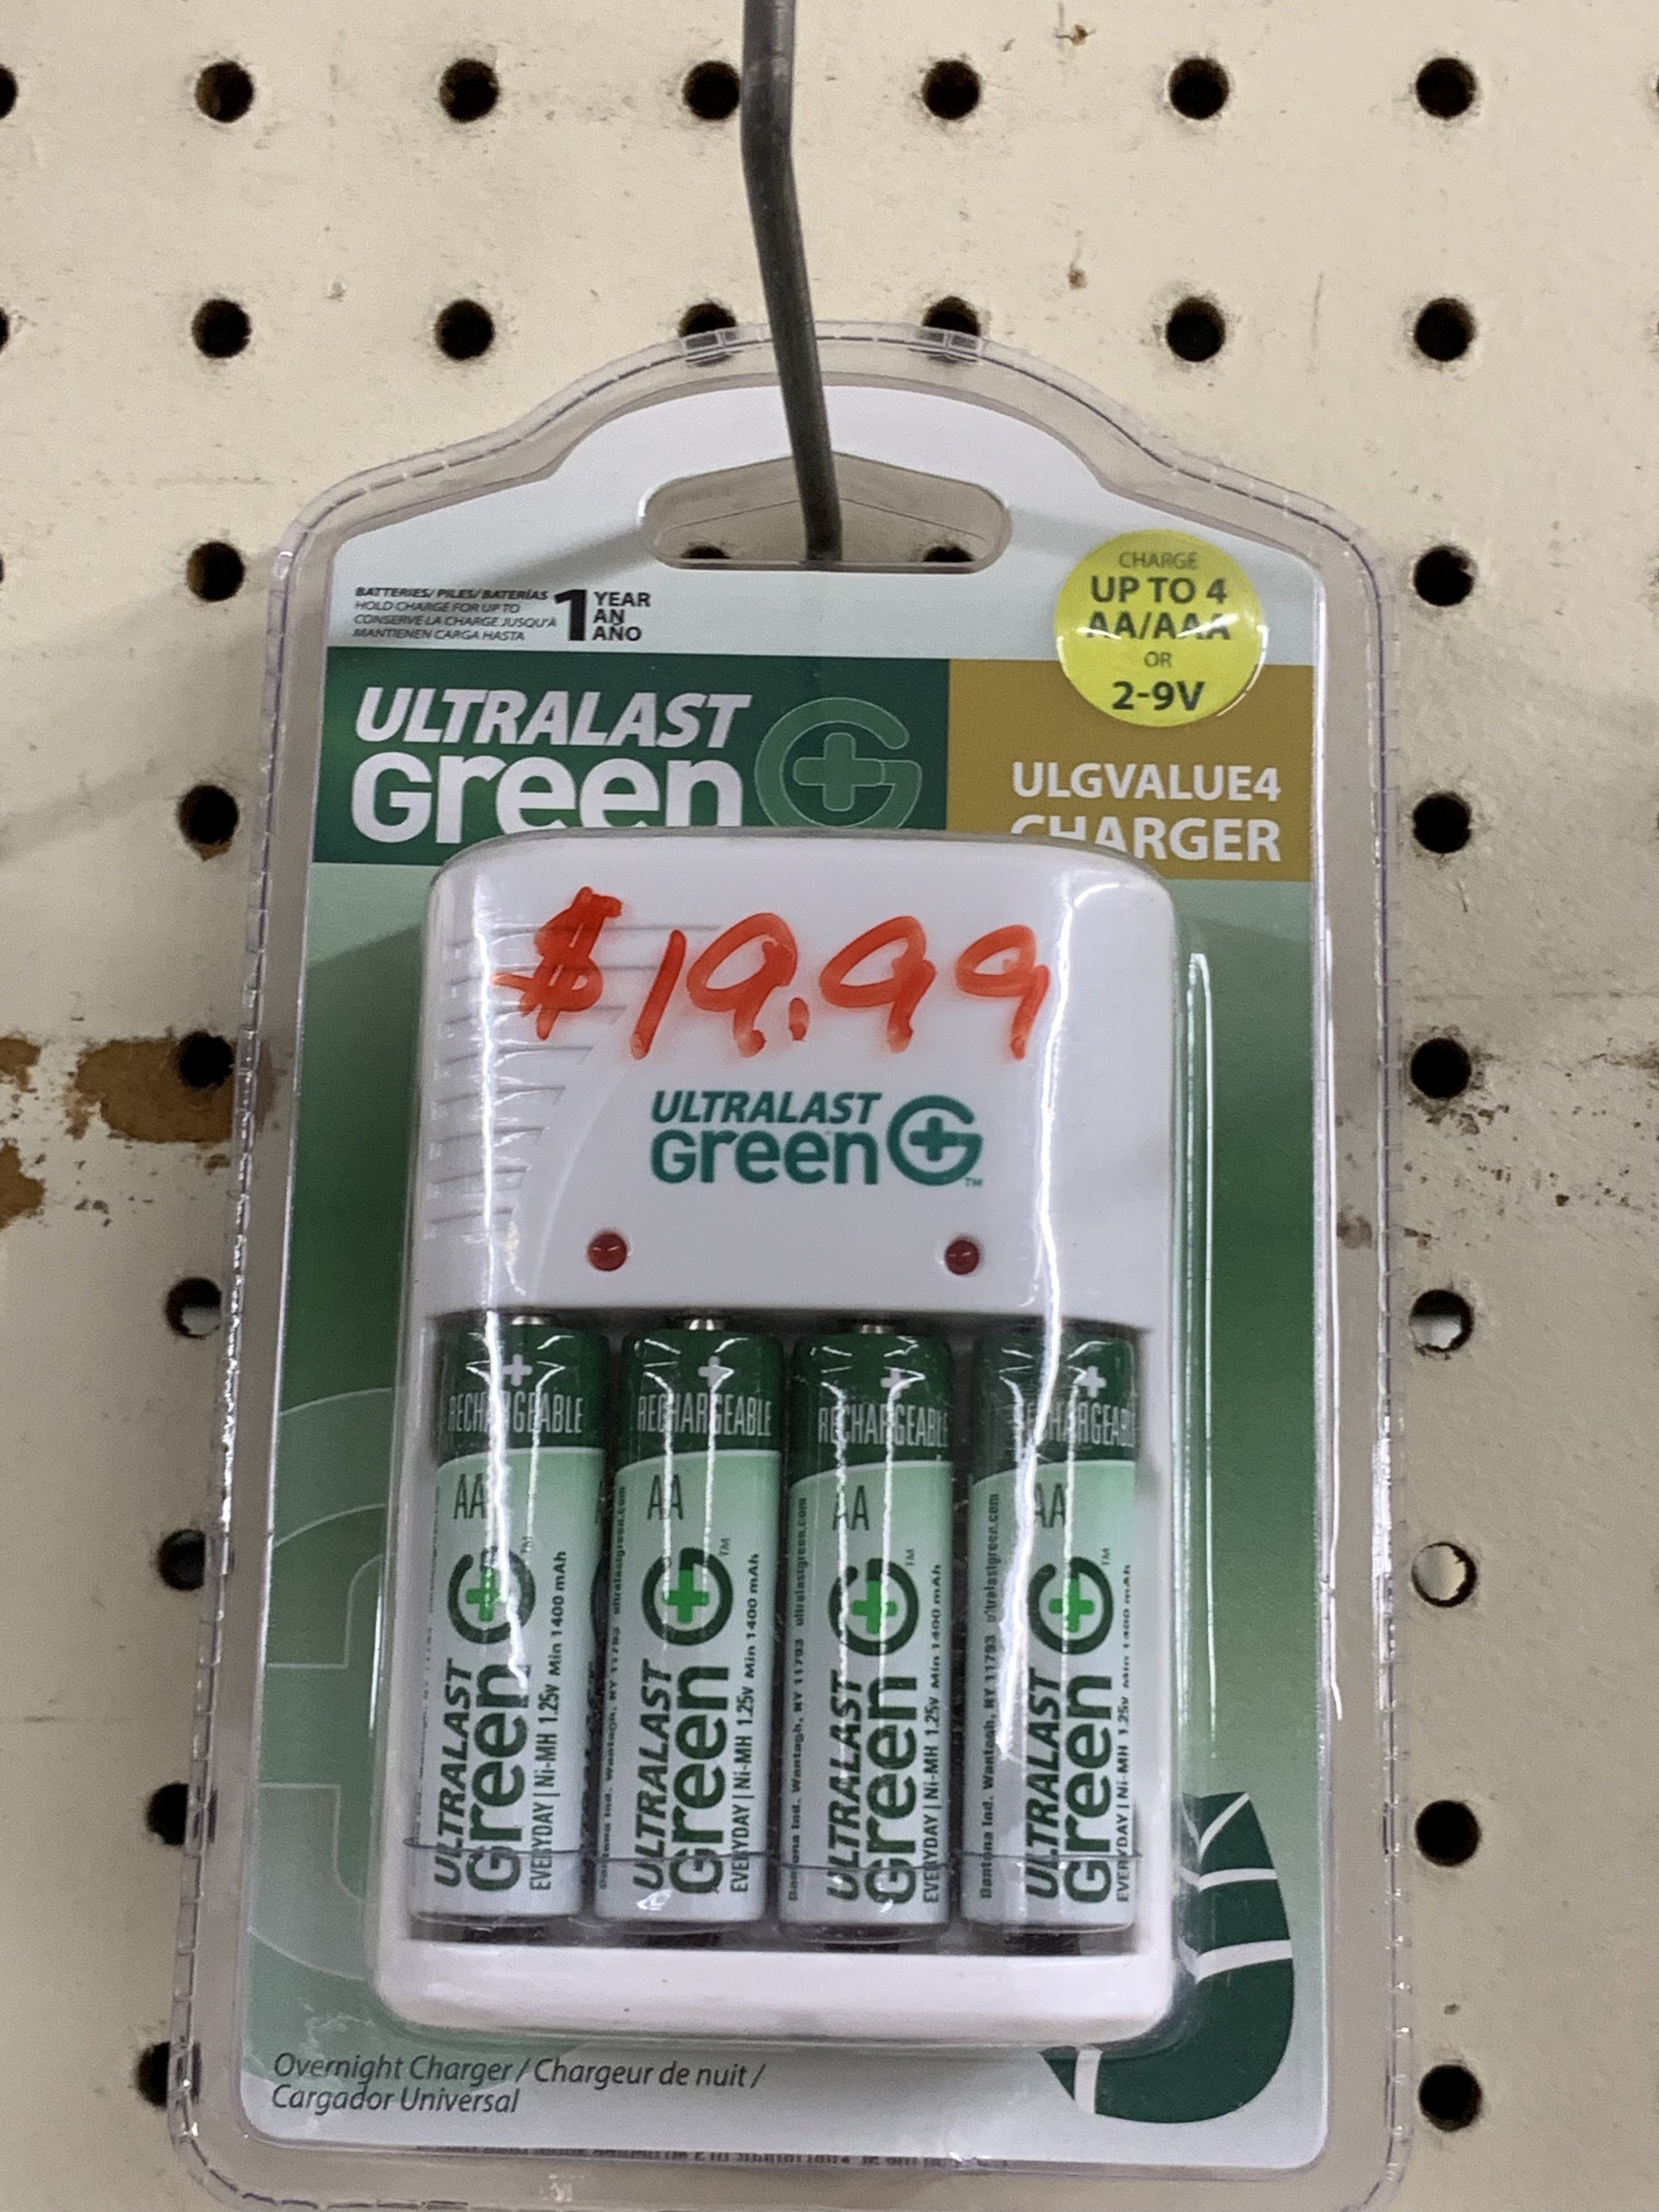 Ultralast Green Battery Charger $19.99